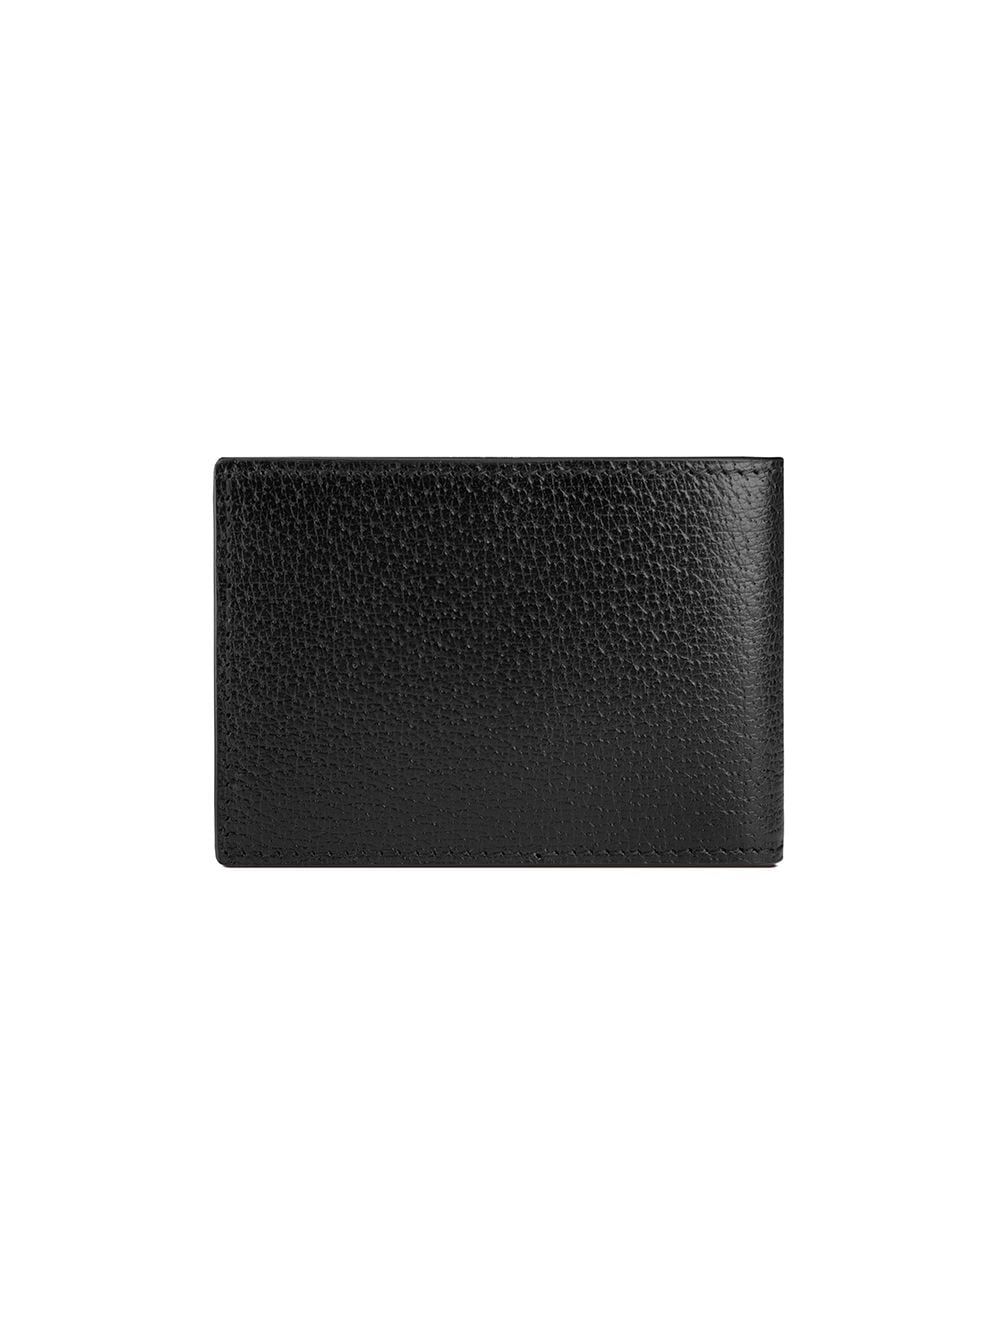 GG Marmont leather bi-fold wallet | Farfetch (US)